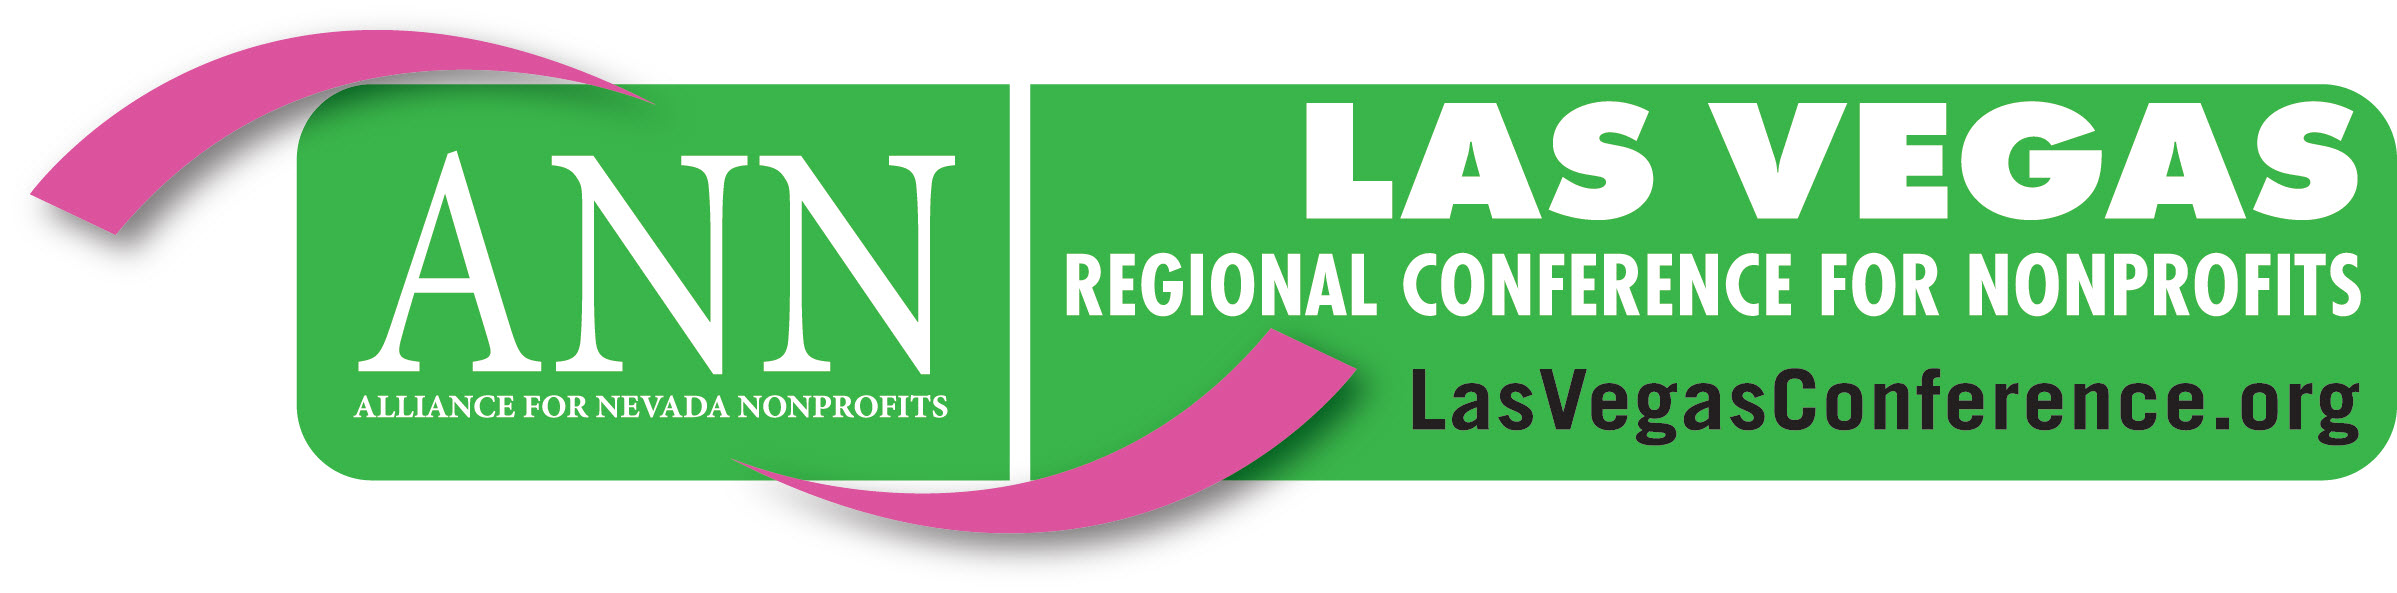 Regional Conferences for Nonprofits - Alliance for Nevada Nonprofits